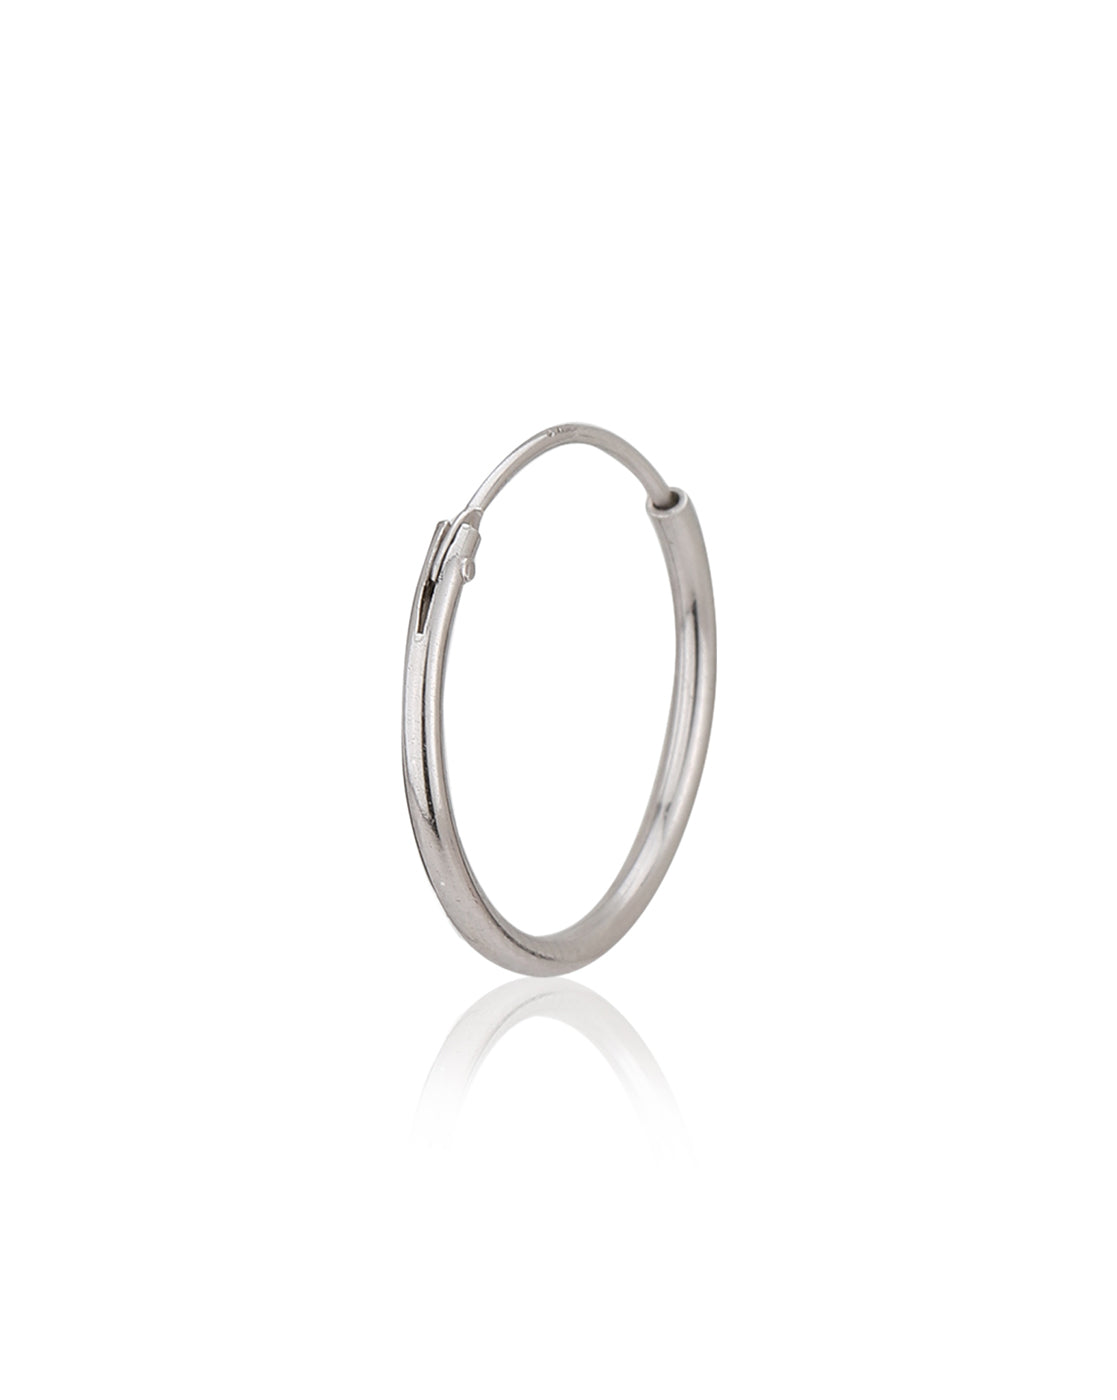 Carlton London 925 Sterling Silver  Rhodium Plated Circular Hoop Earring For Women